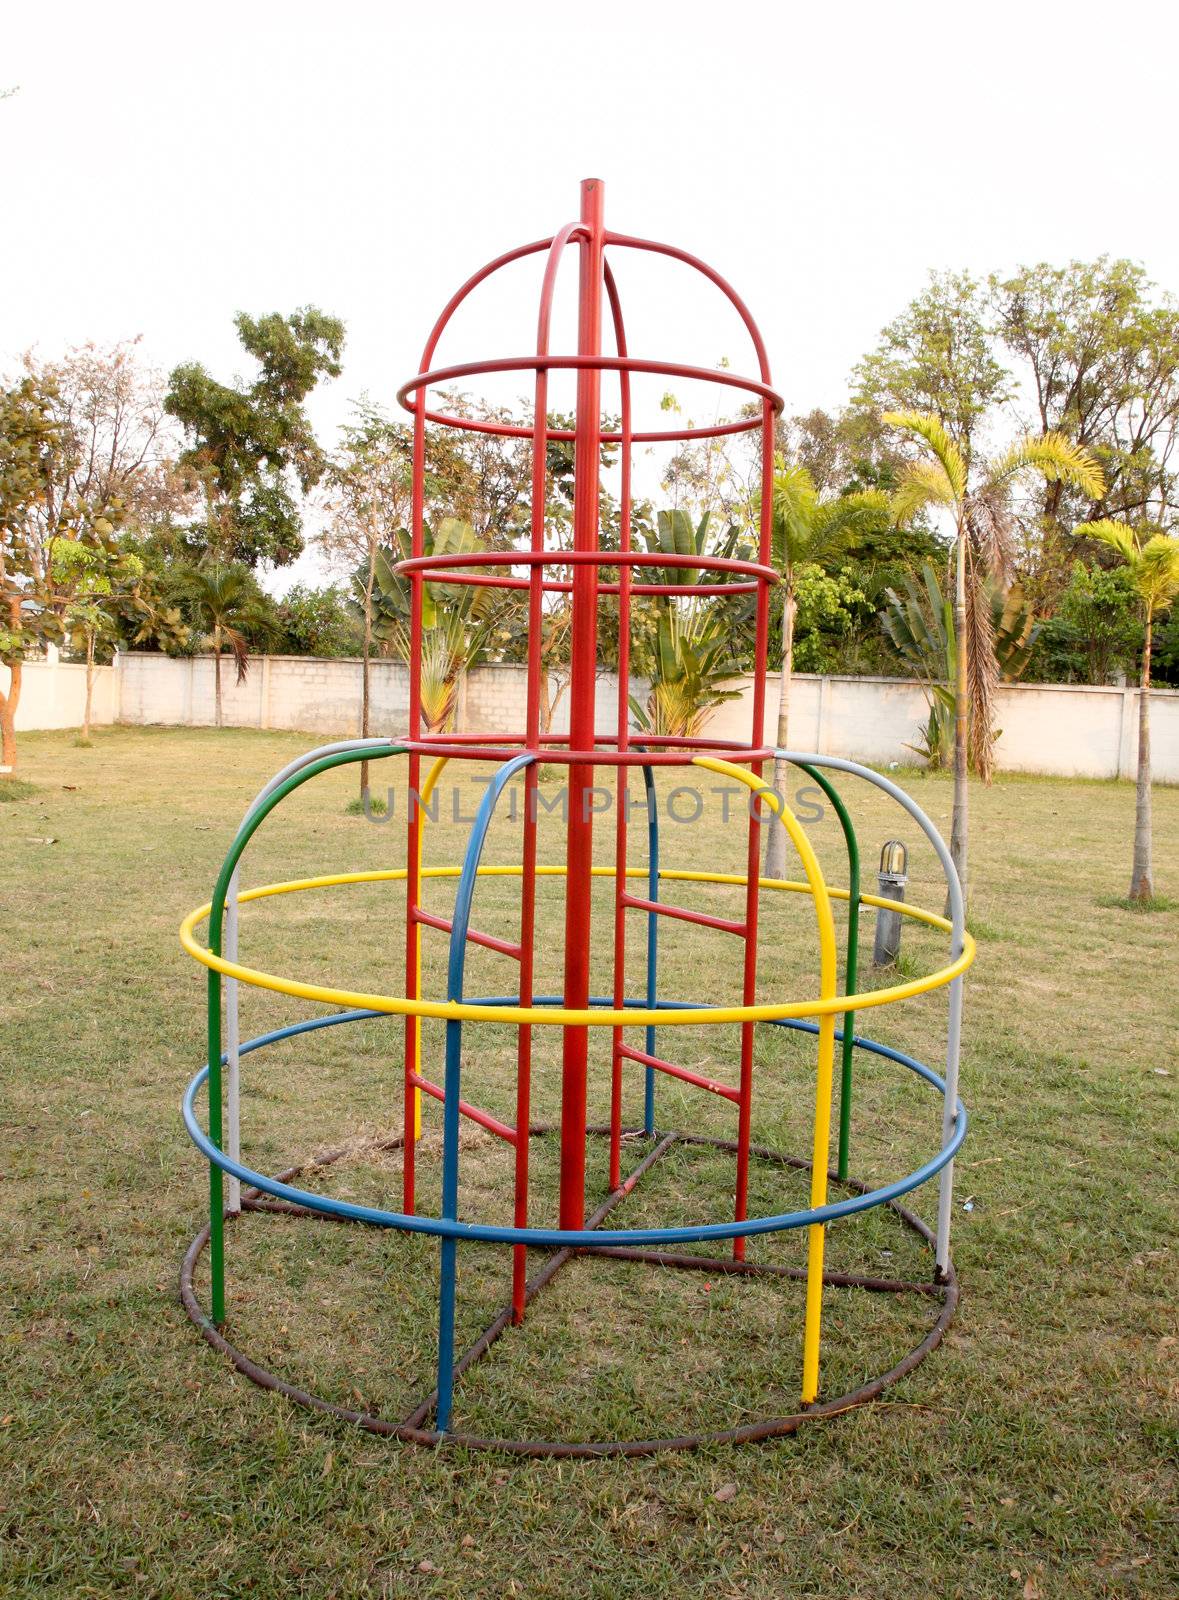 toy of playground without children by geargodz